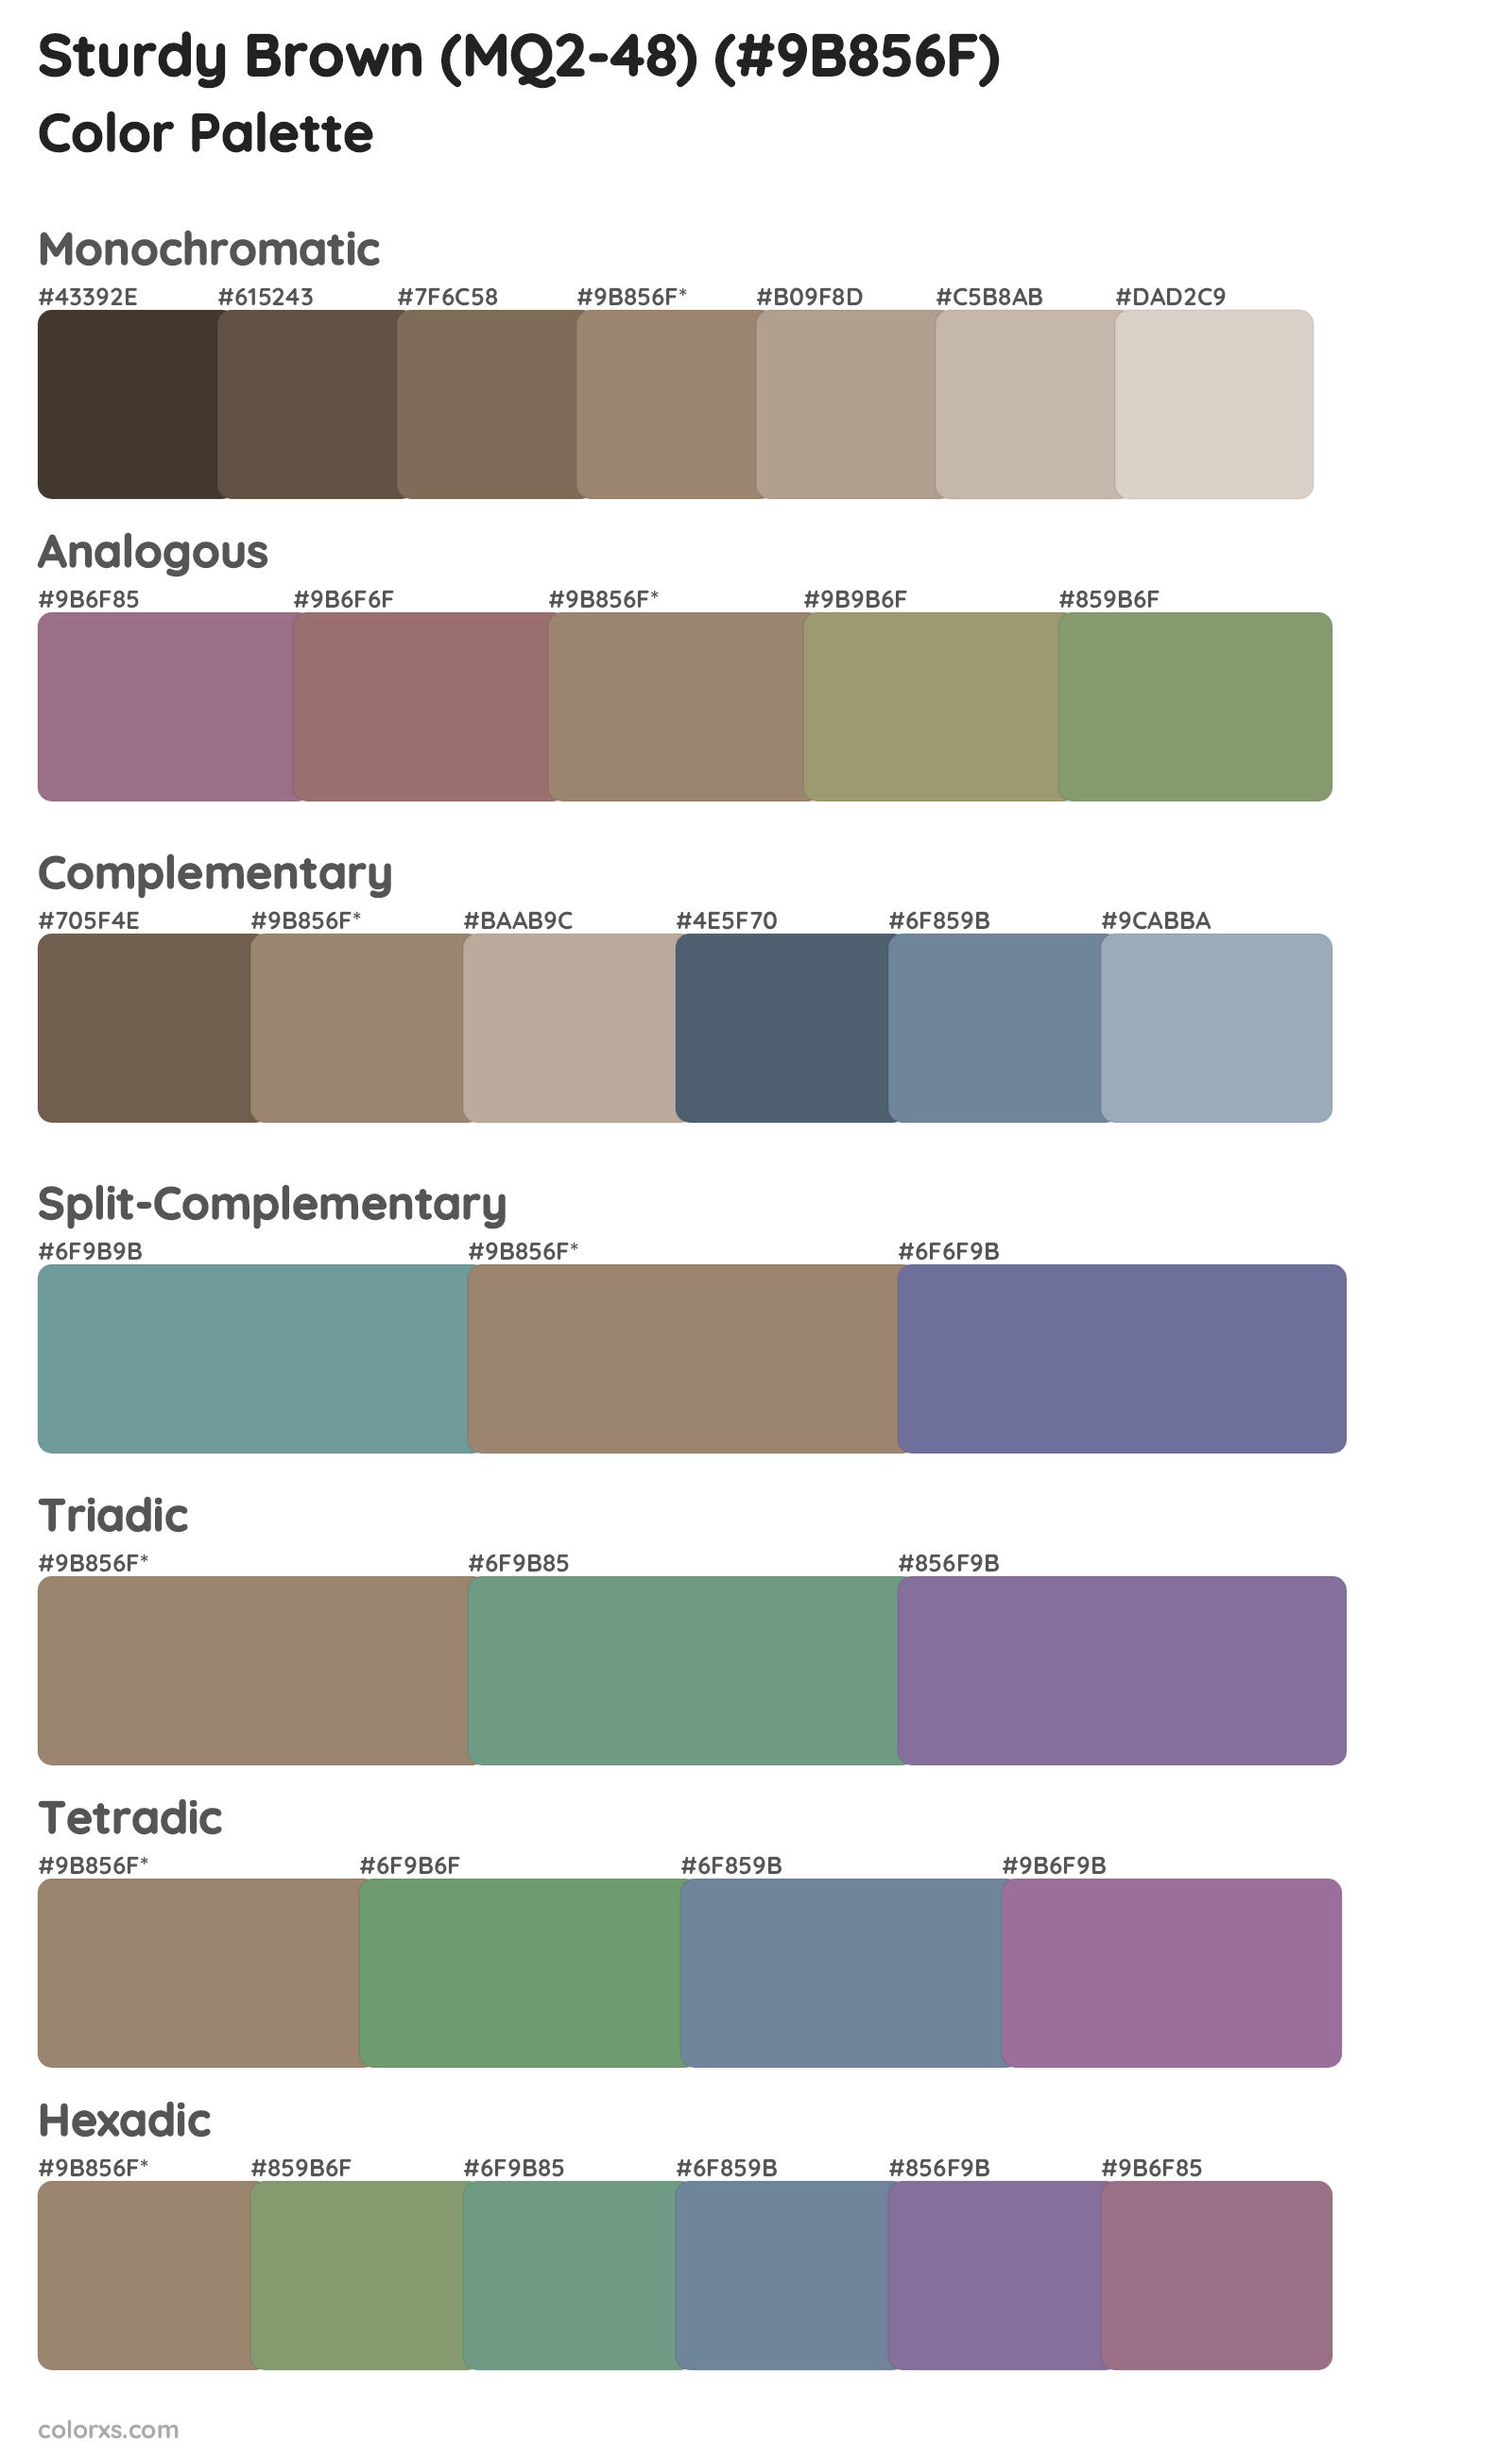 Sturdy Brown (MQ2-48) Color Scheme Palettes